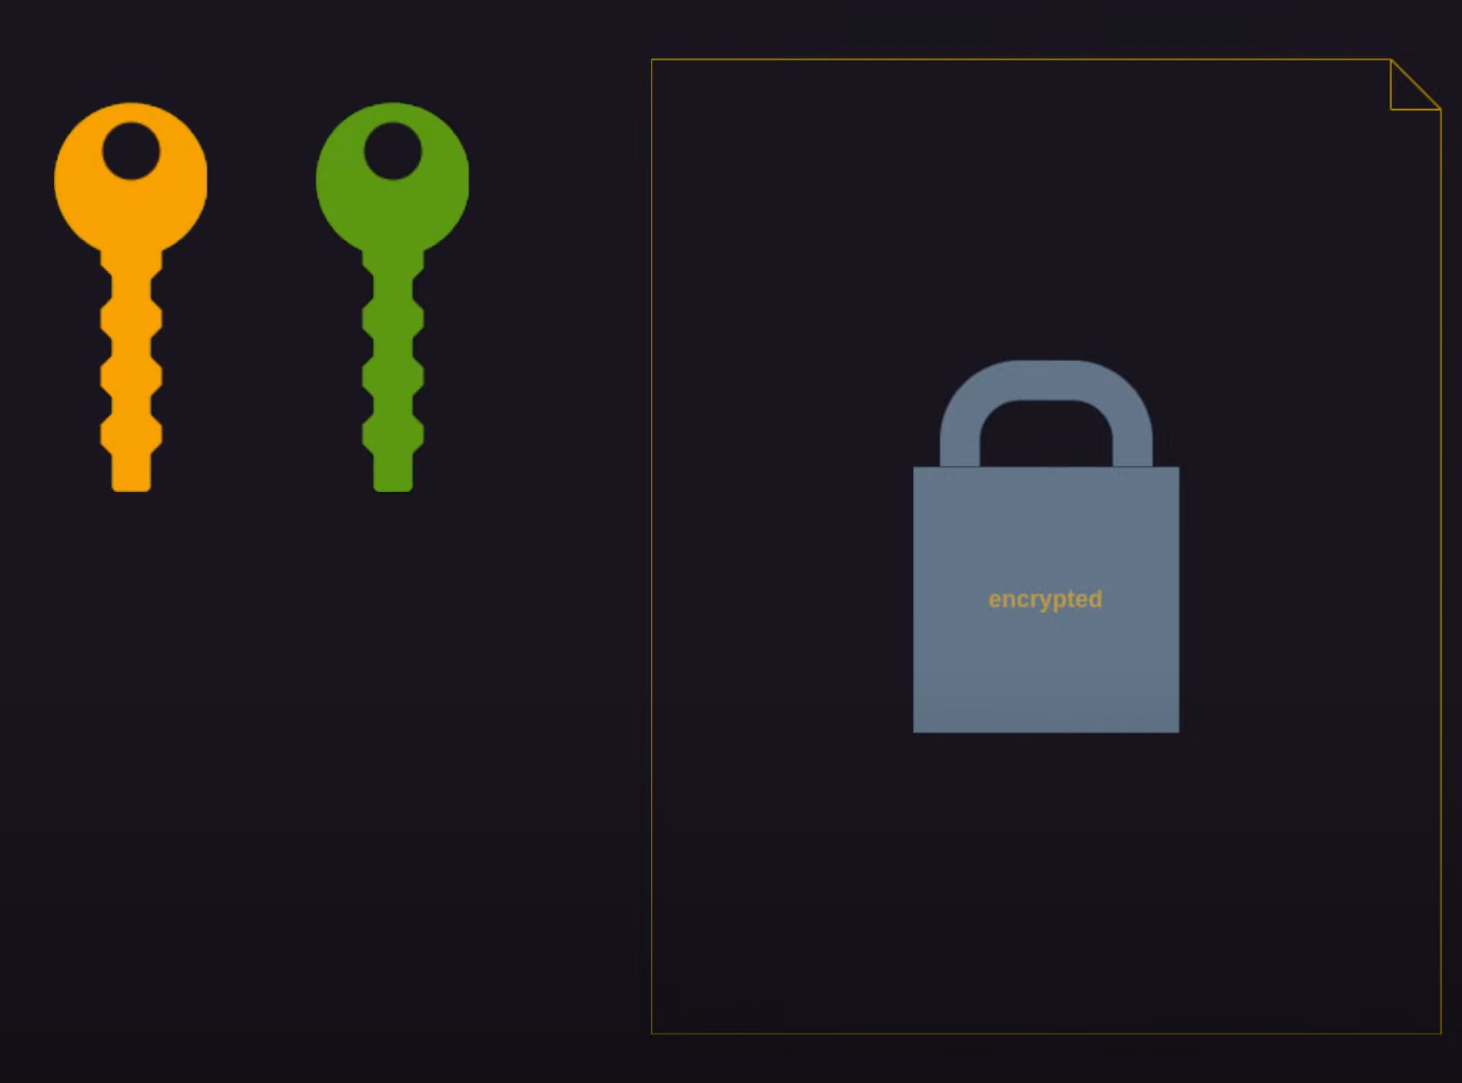 sops allows multiple keys to decrypt the same secrets file